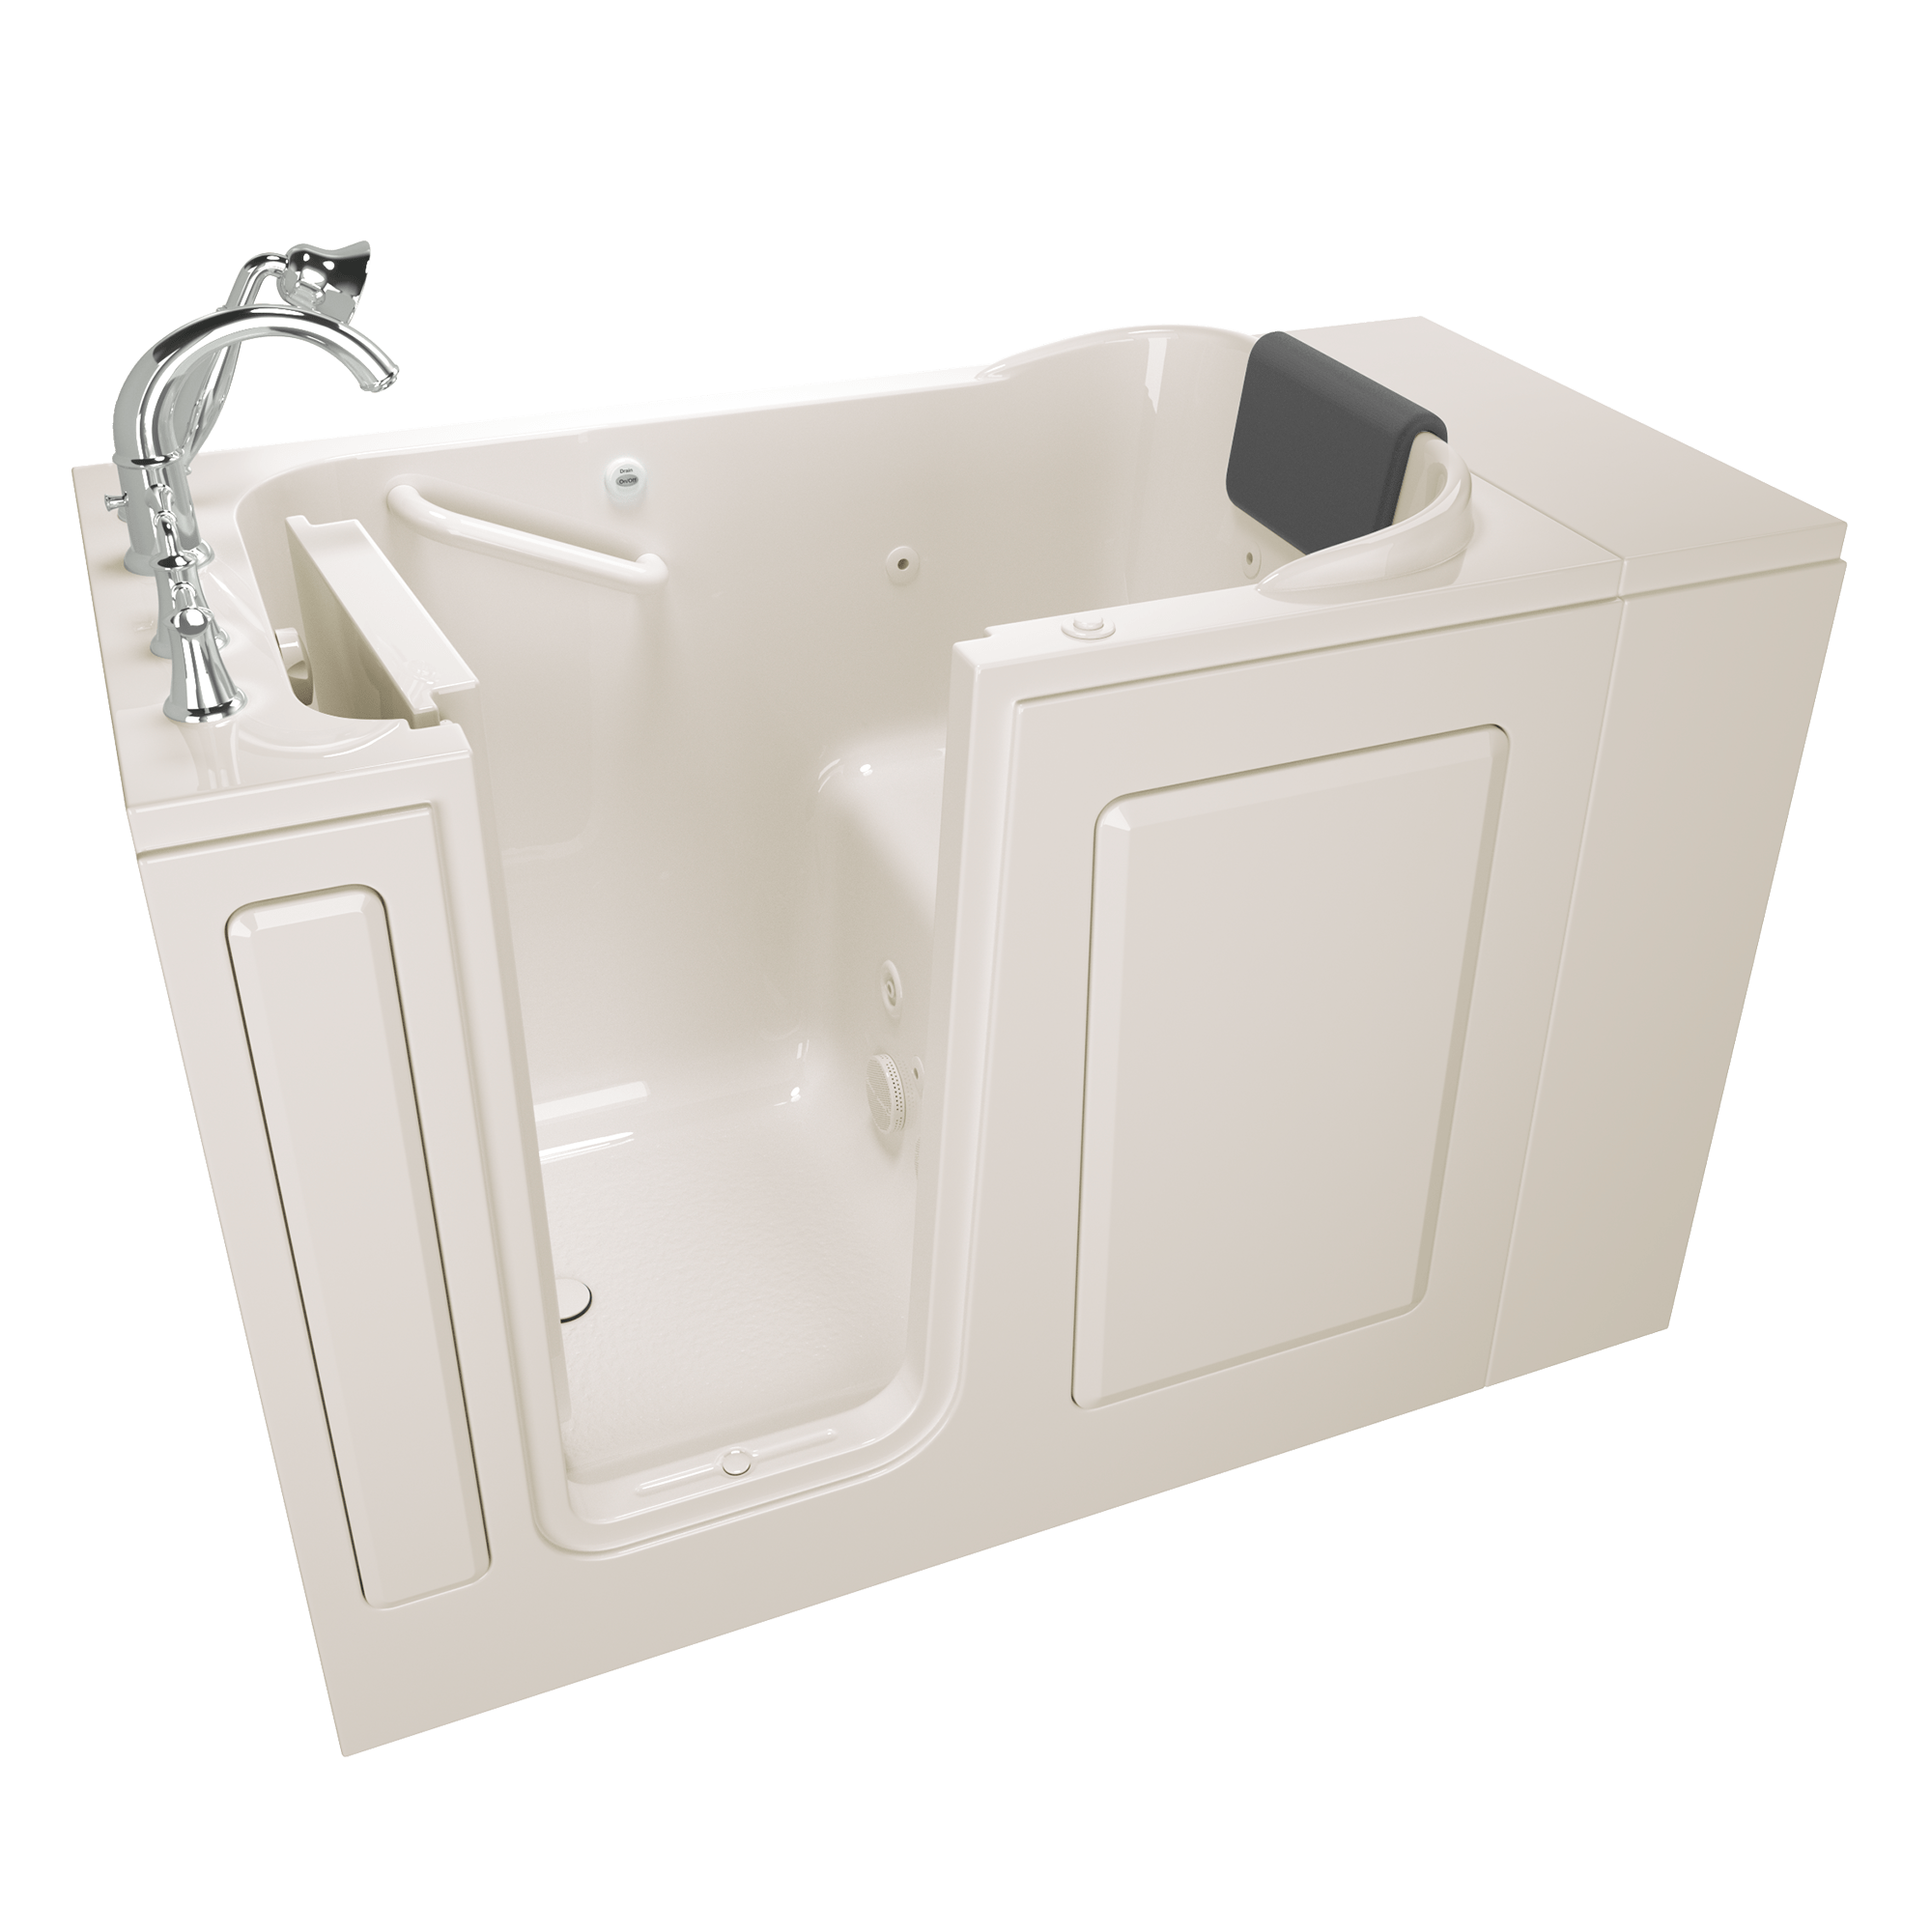 Gelcoat Premium Series 48x28 Inch Walk-In Bathtub with Jet Massage System - Left Hand Door and Drain